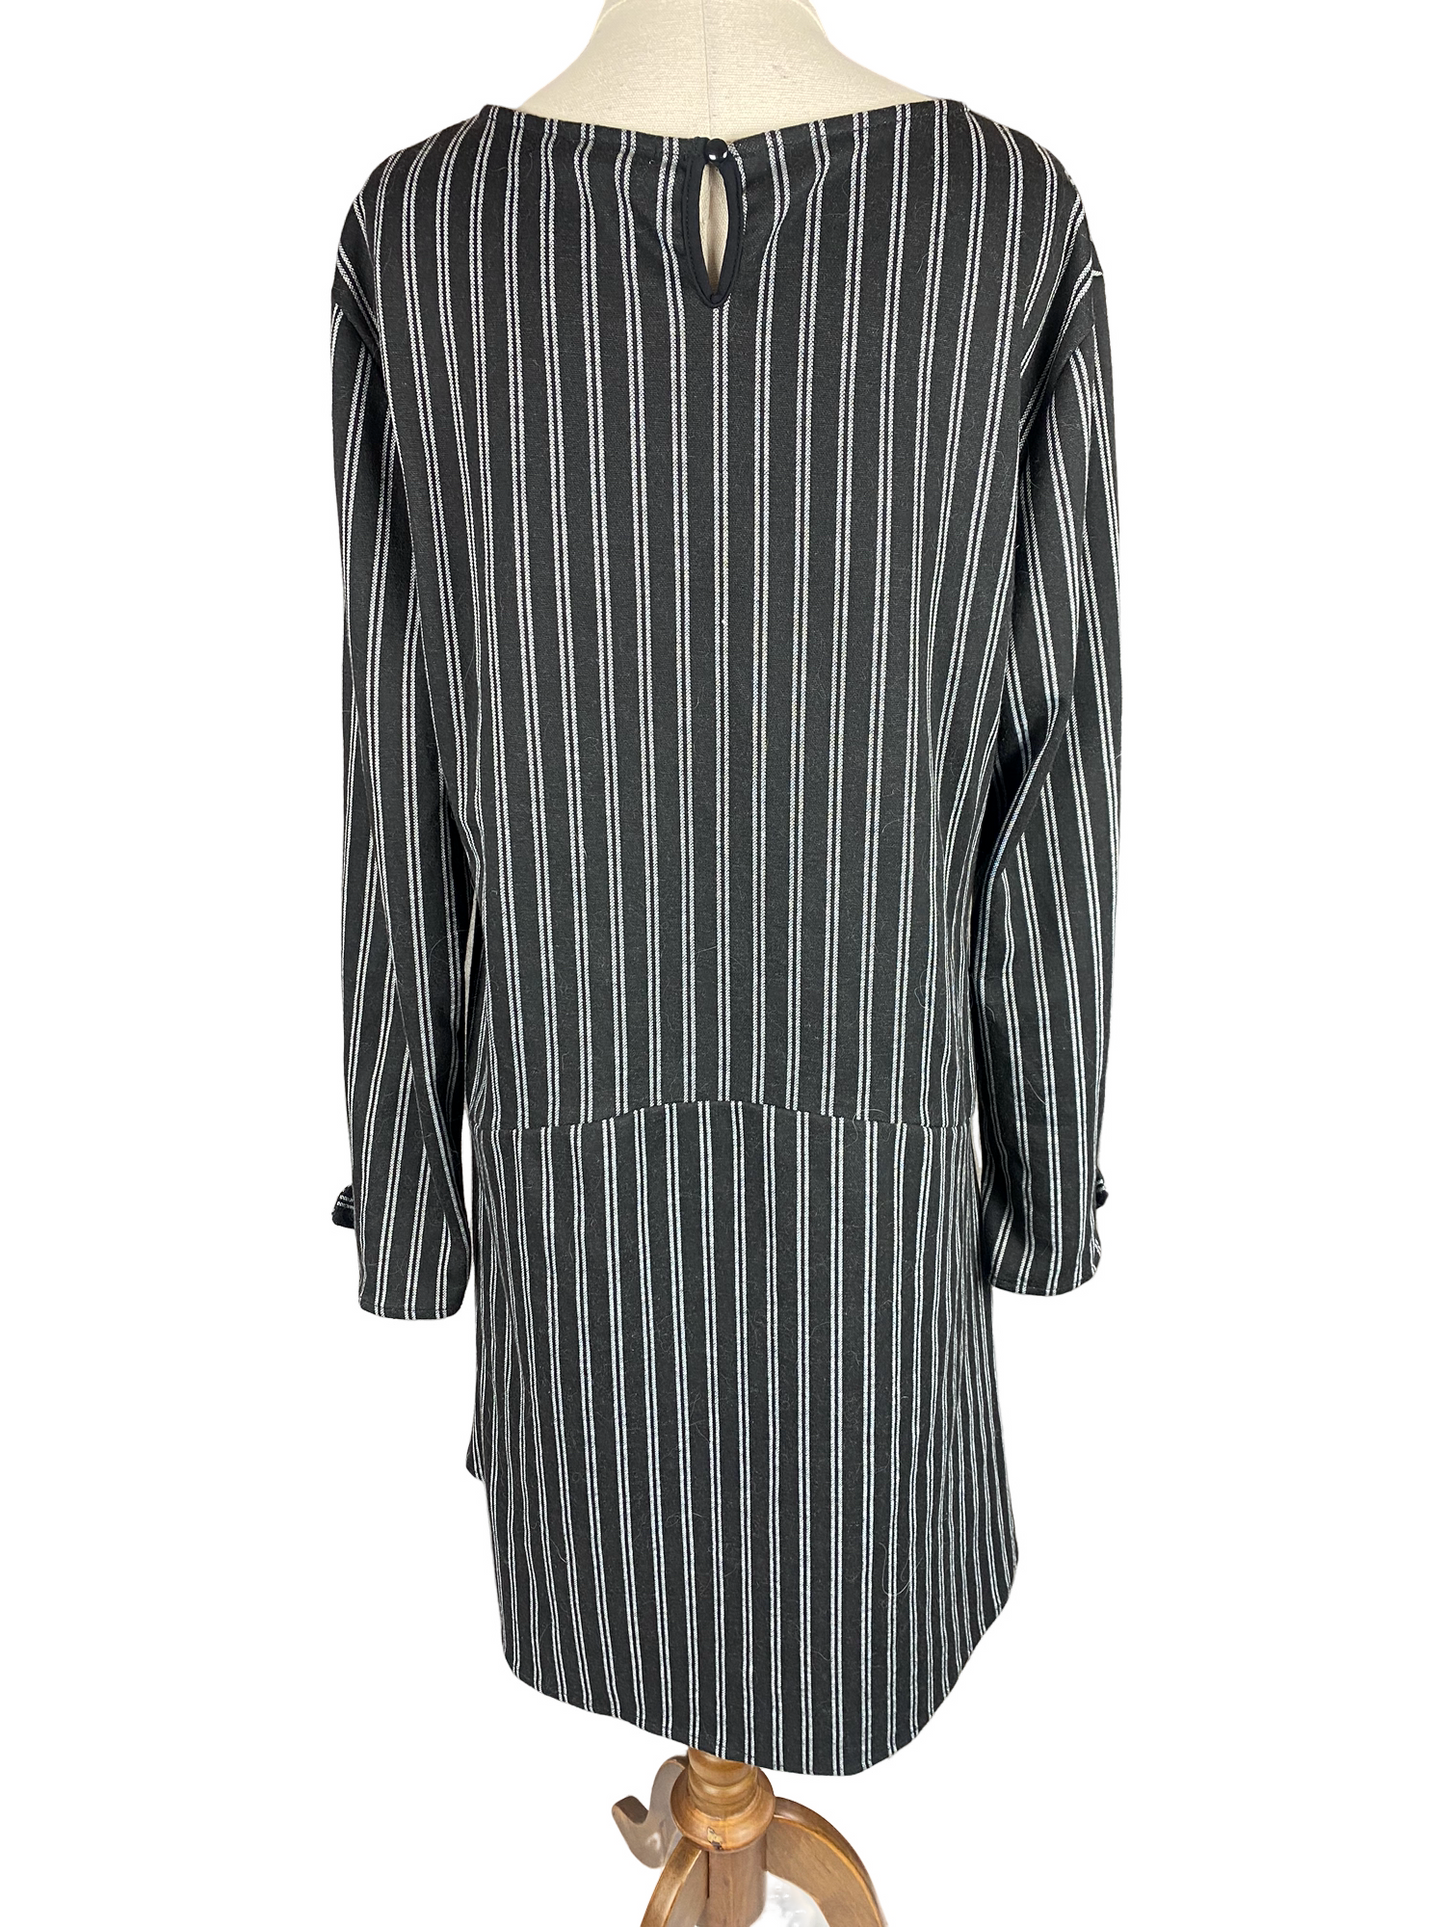 Brave + True black and white stripe dress | size 14